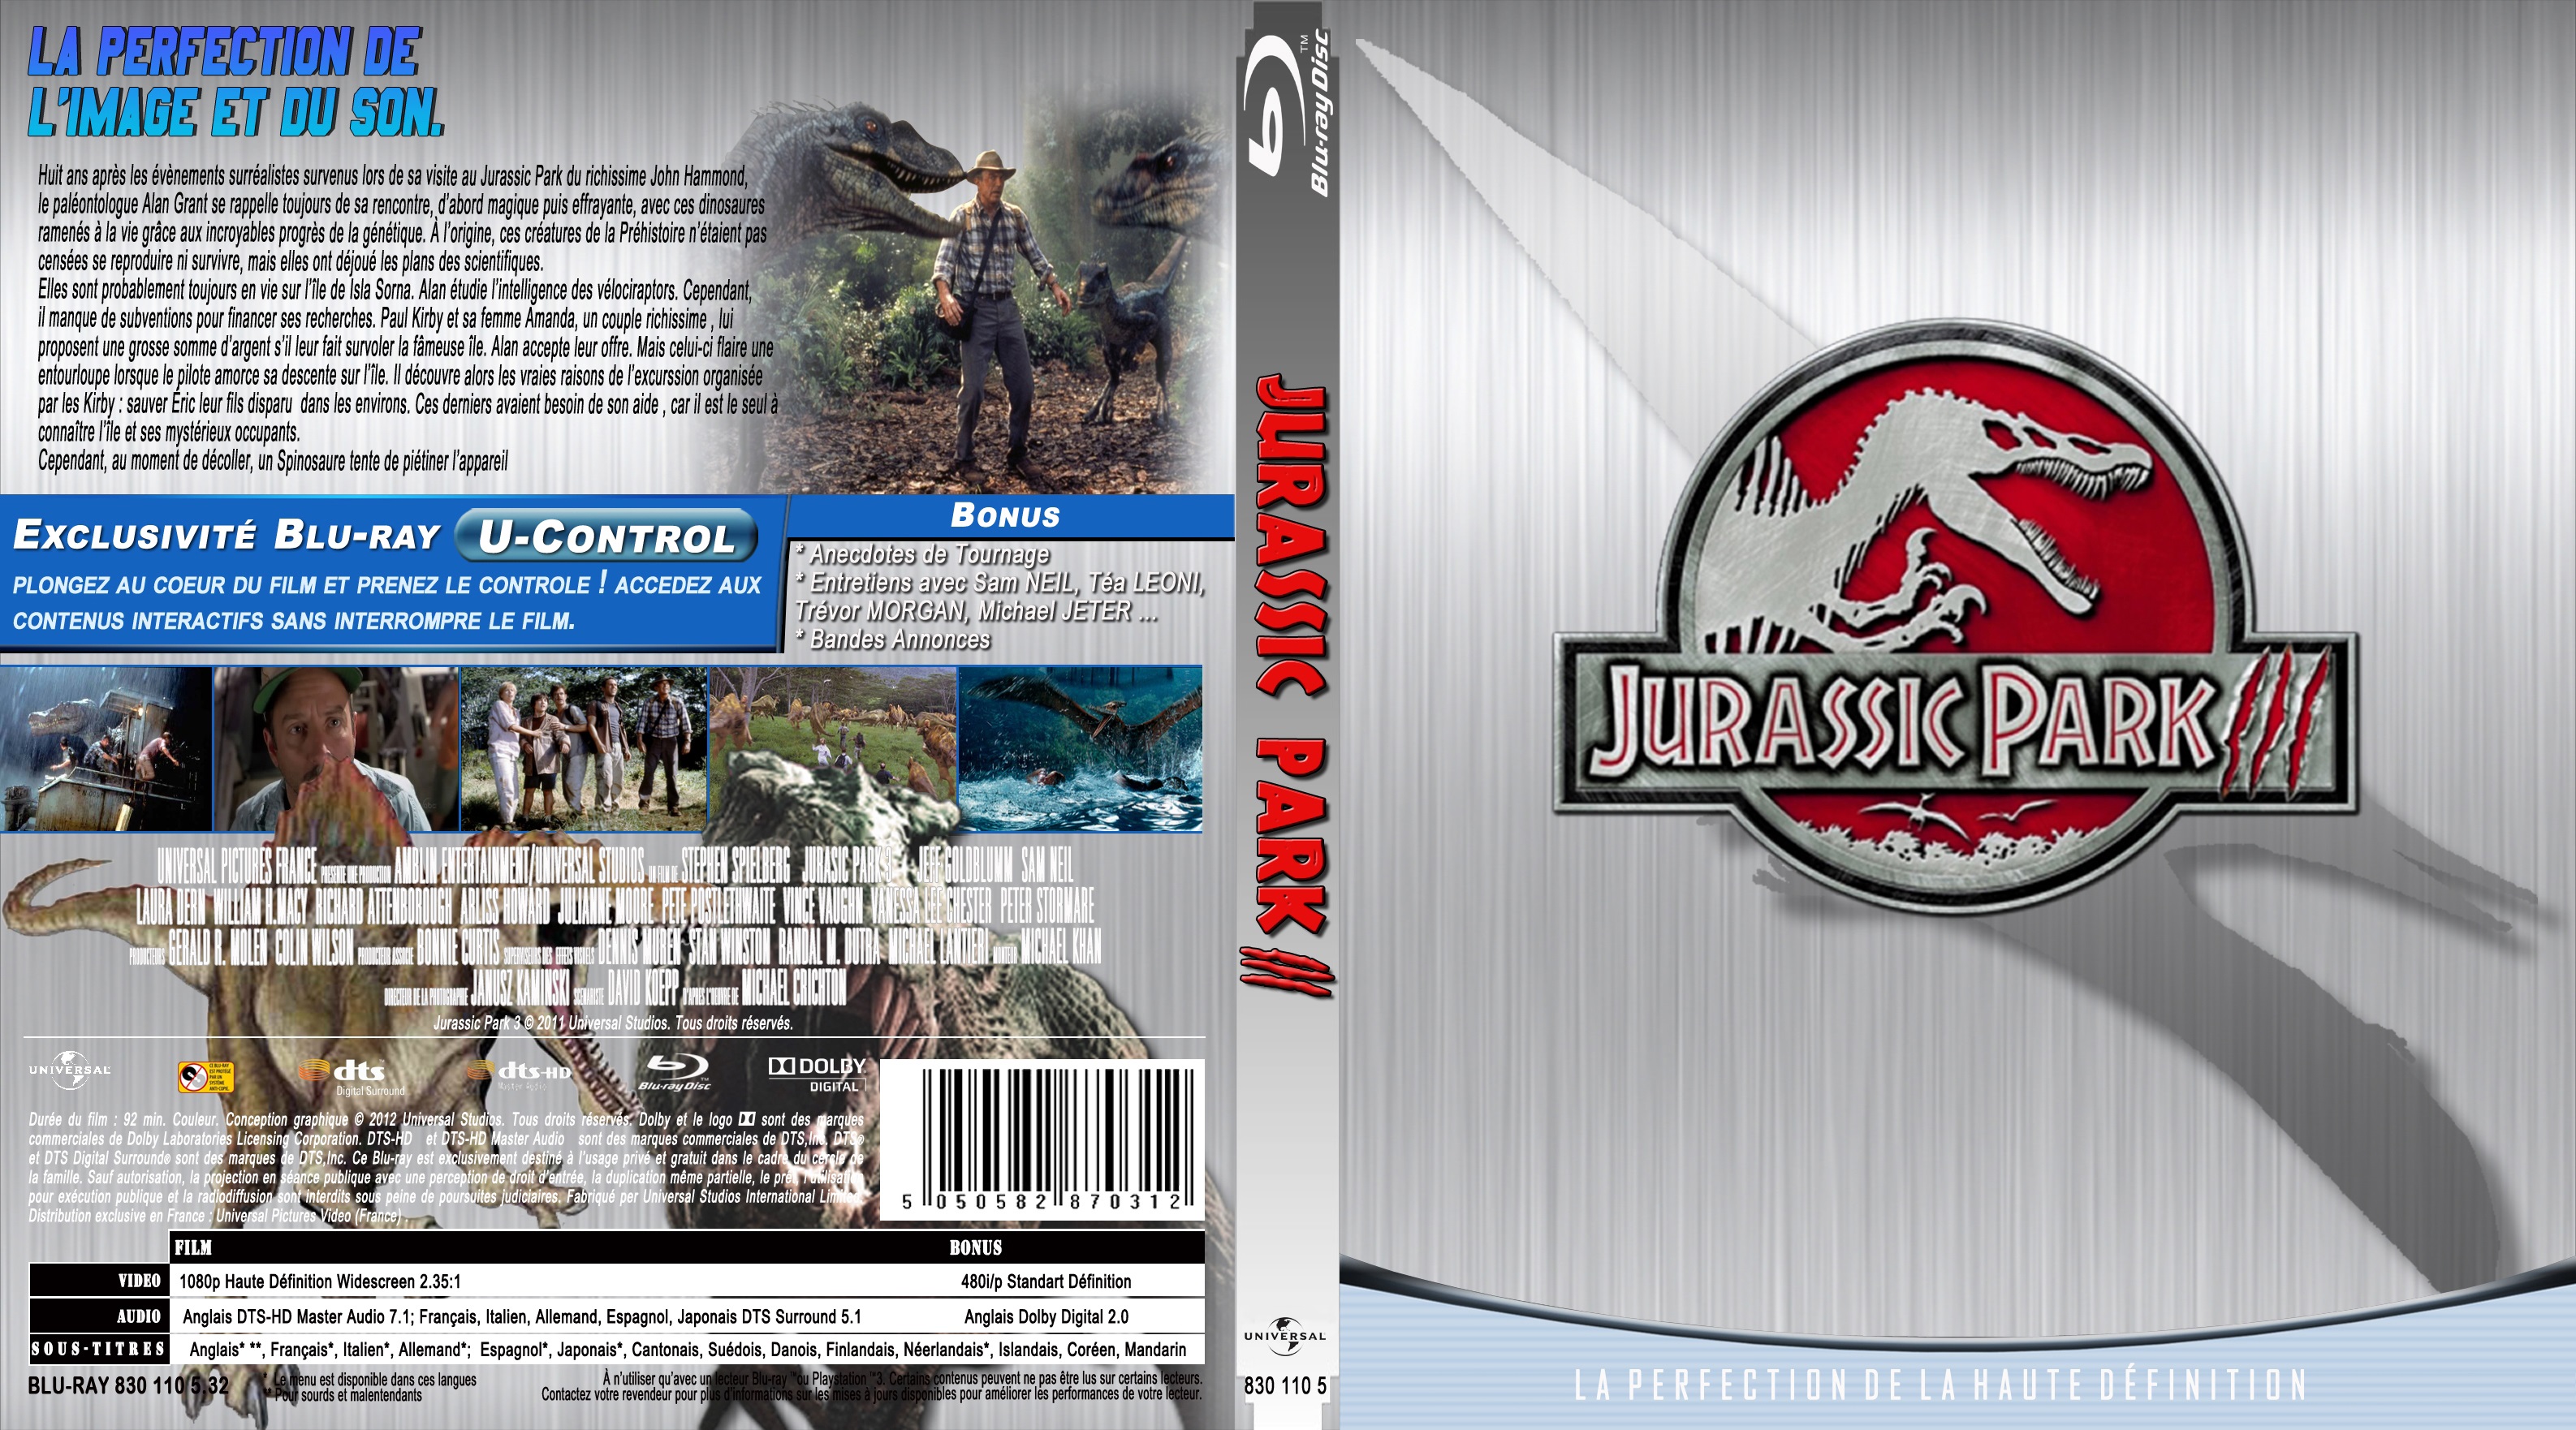 Jaquette DVD Jurassic park 3 (BLU-RAY) custom v2